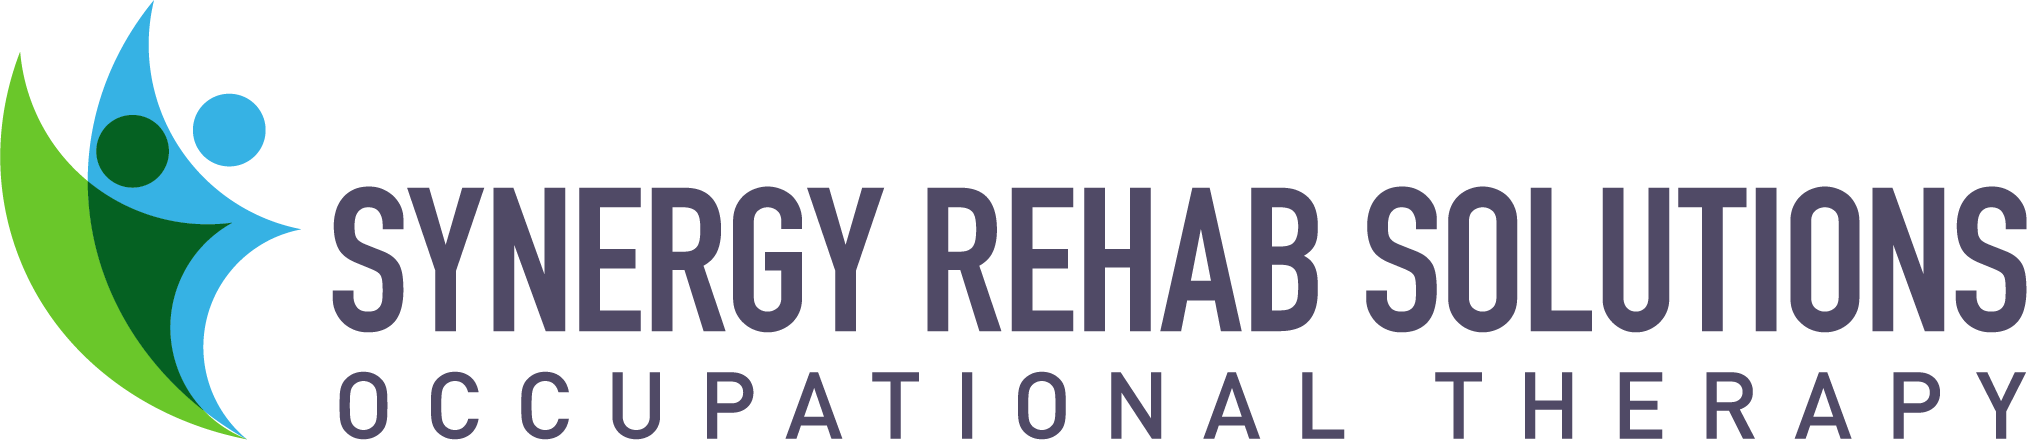 Synergy Rehab Solutions